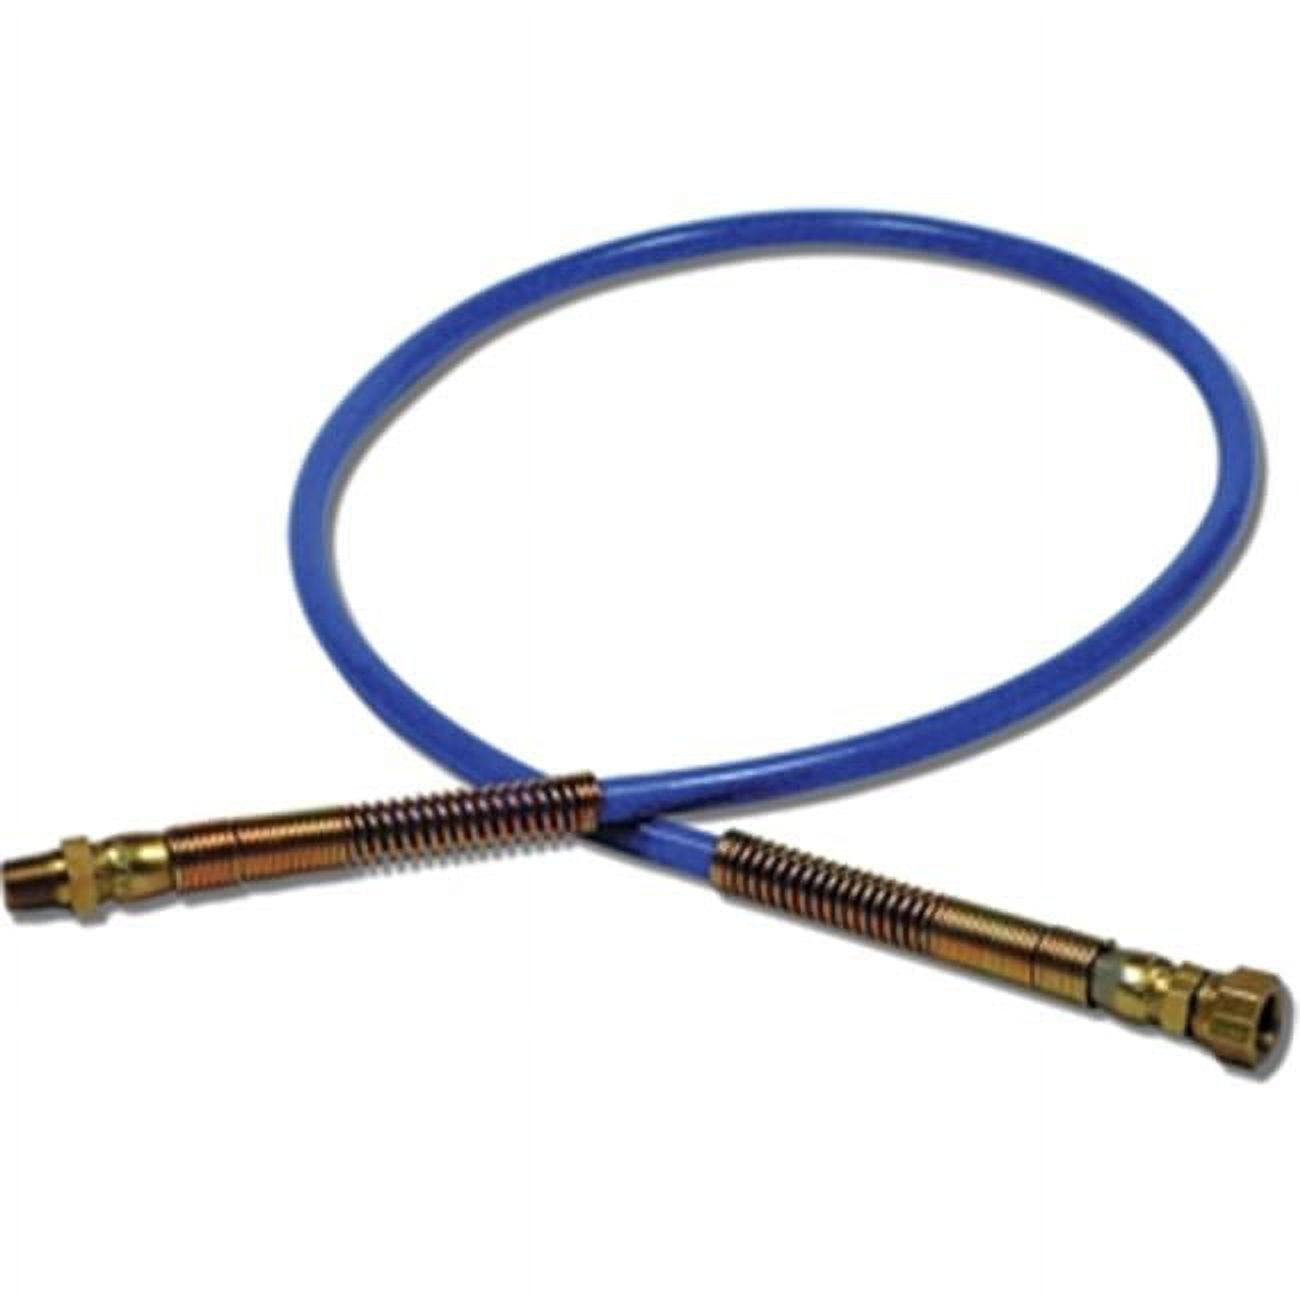 Fuji Spray 2049F 6-Foot Flexible Whip Hose, Blue